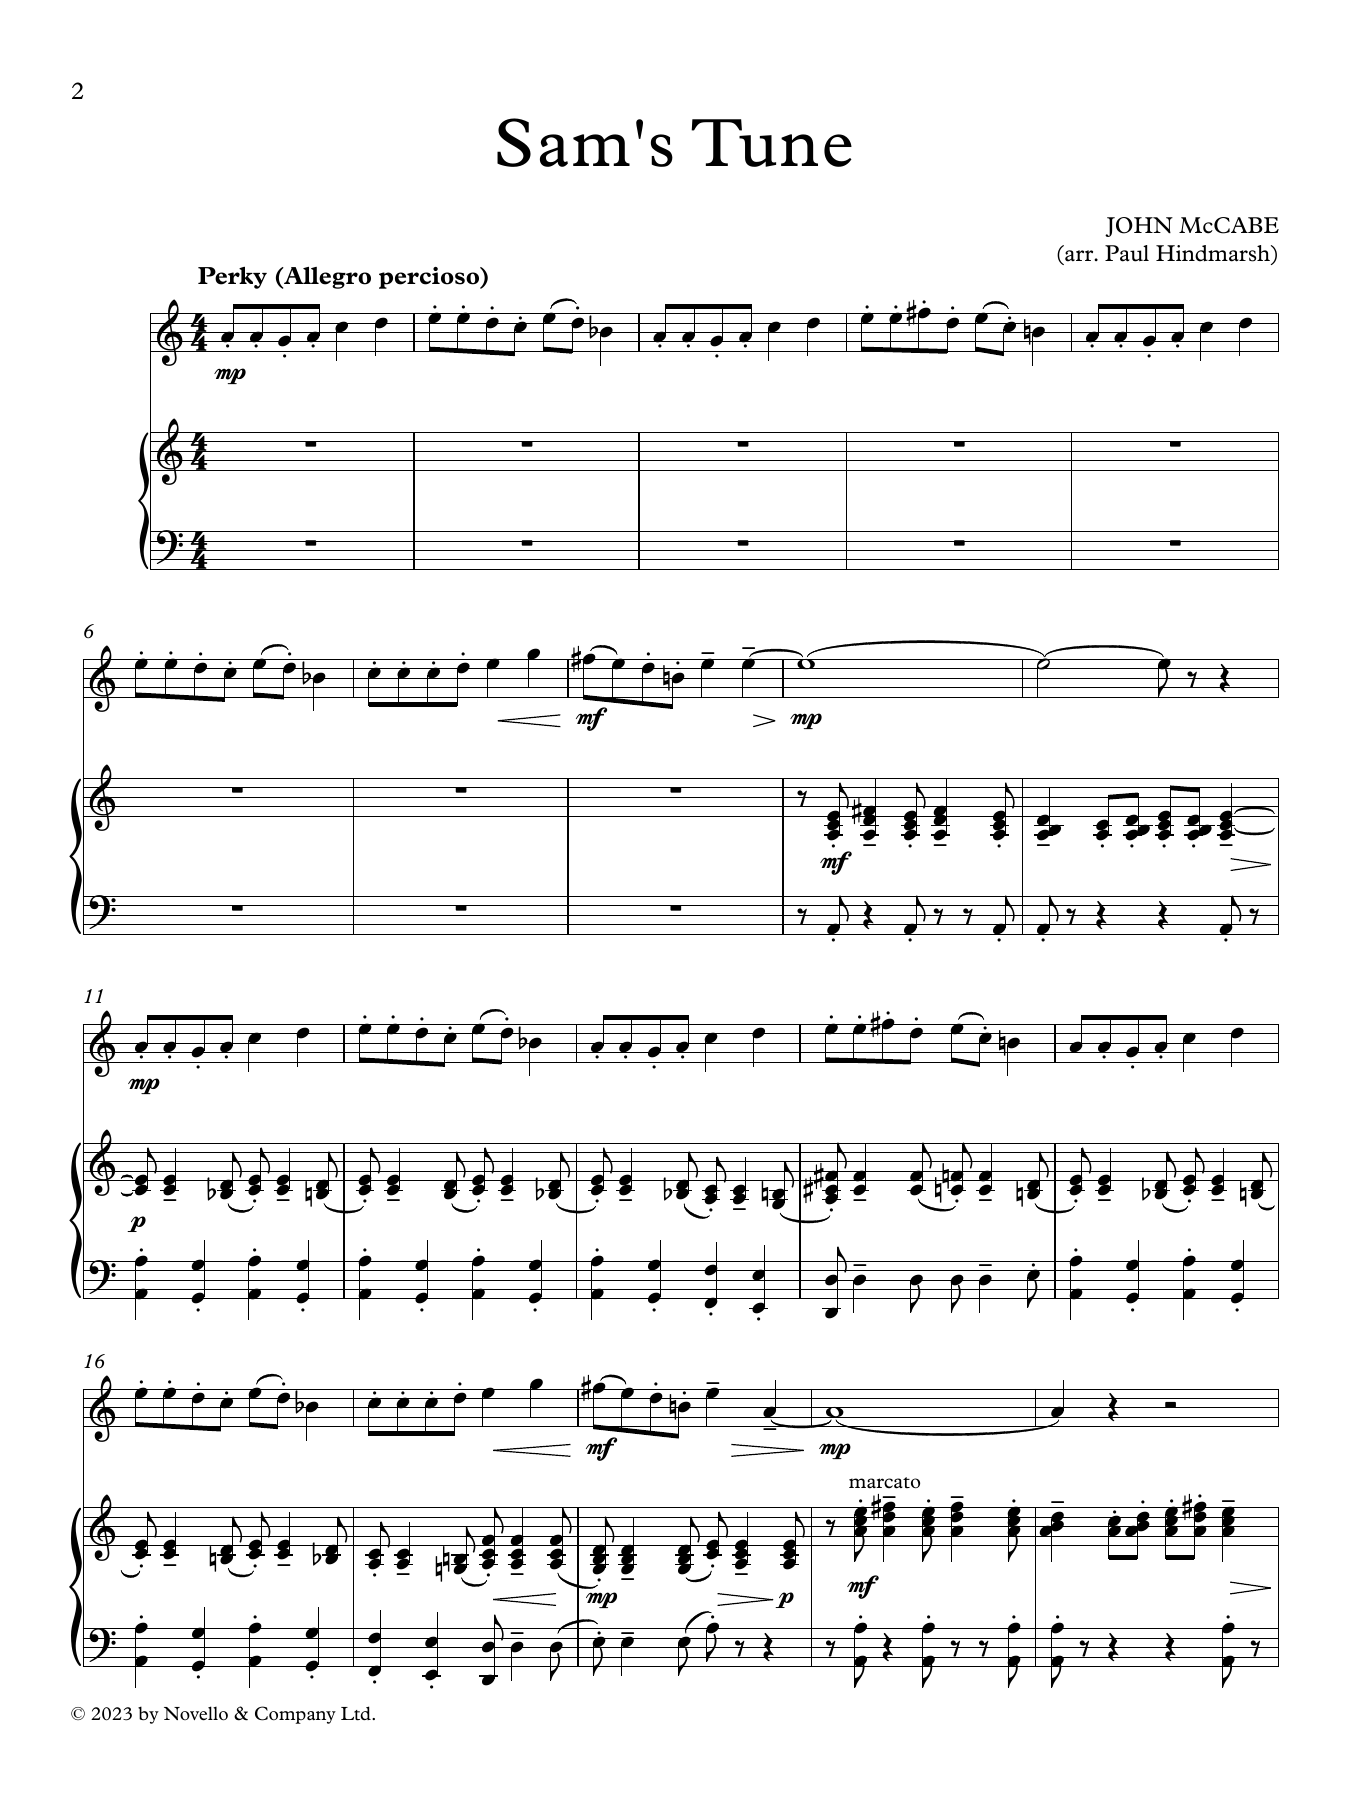 John McCabe Sam's Tune (arr. Paul Hindmarsh) Sheet Music Notes & Chords for Instrumental Solo – Treble Clef High Range - Download or Print PDF